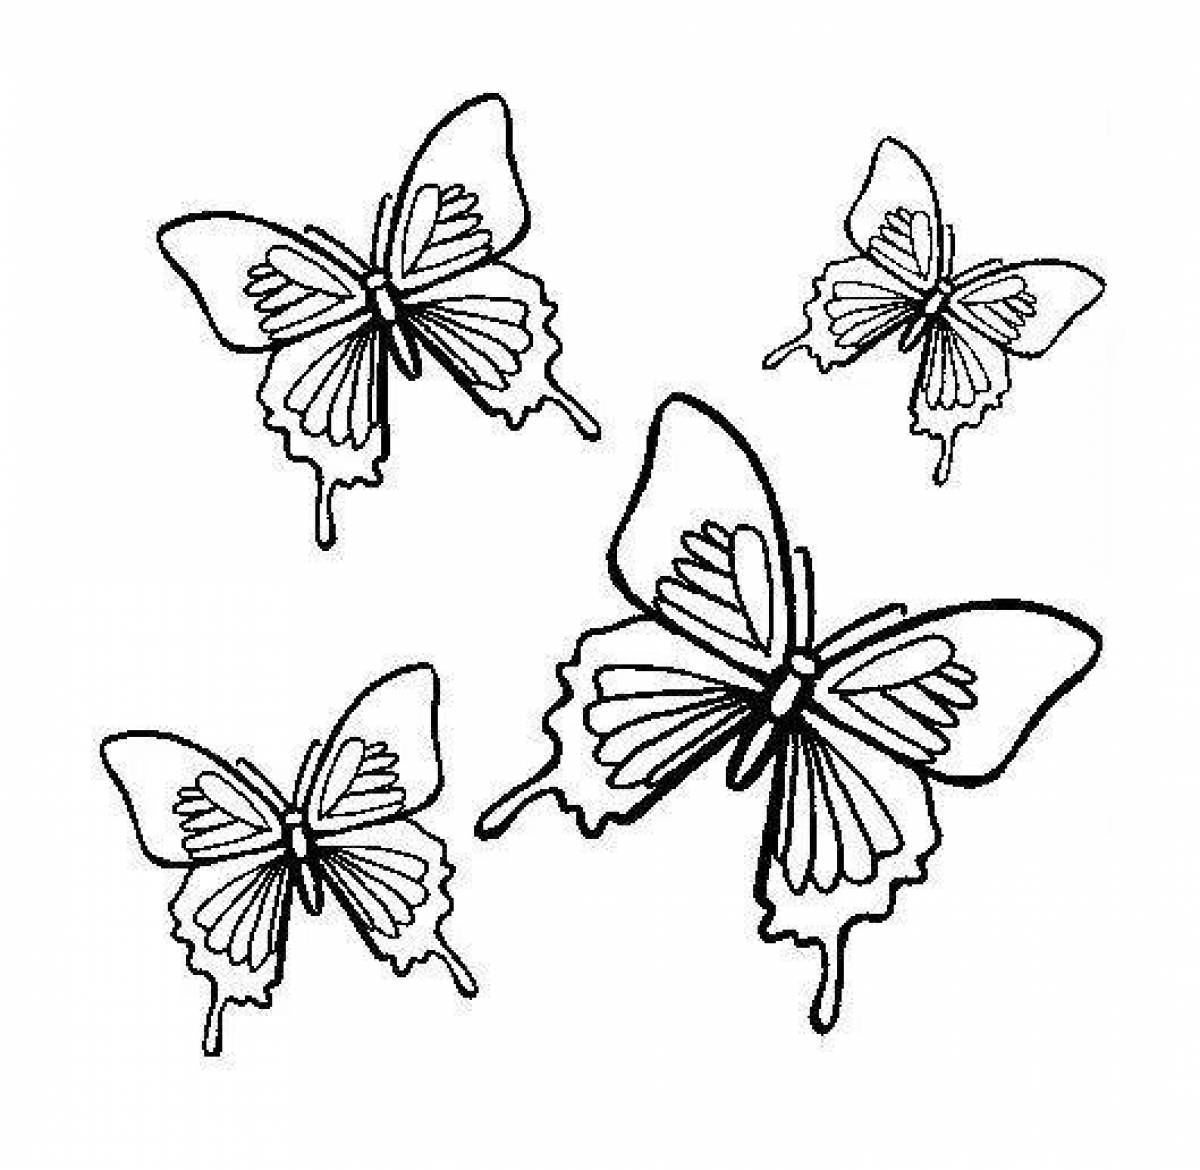 Enchanting multiple butterflies on one sheet